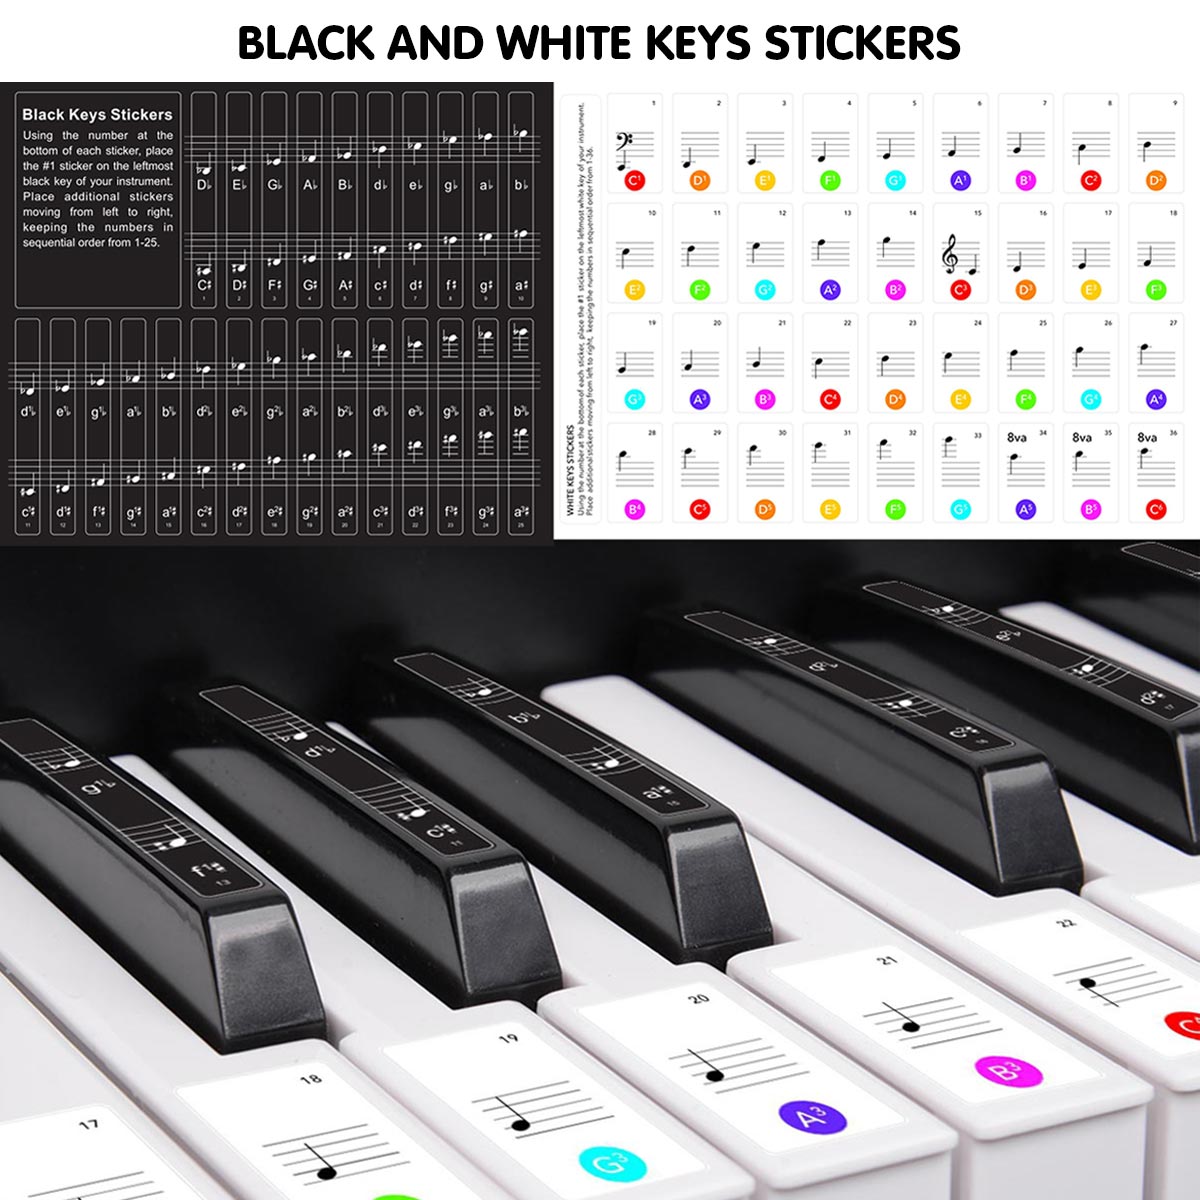 61-Key Electronic Keyboard with Stand, 255 Rhythms, Silver